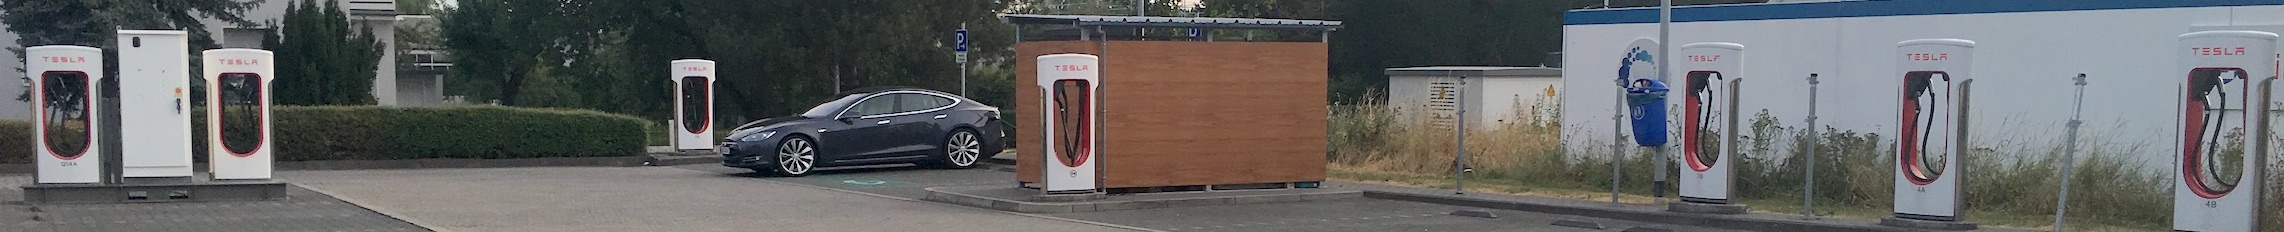 My Tesla charging at a Tesla Supercharger